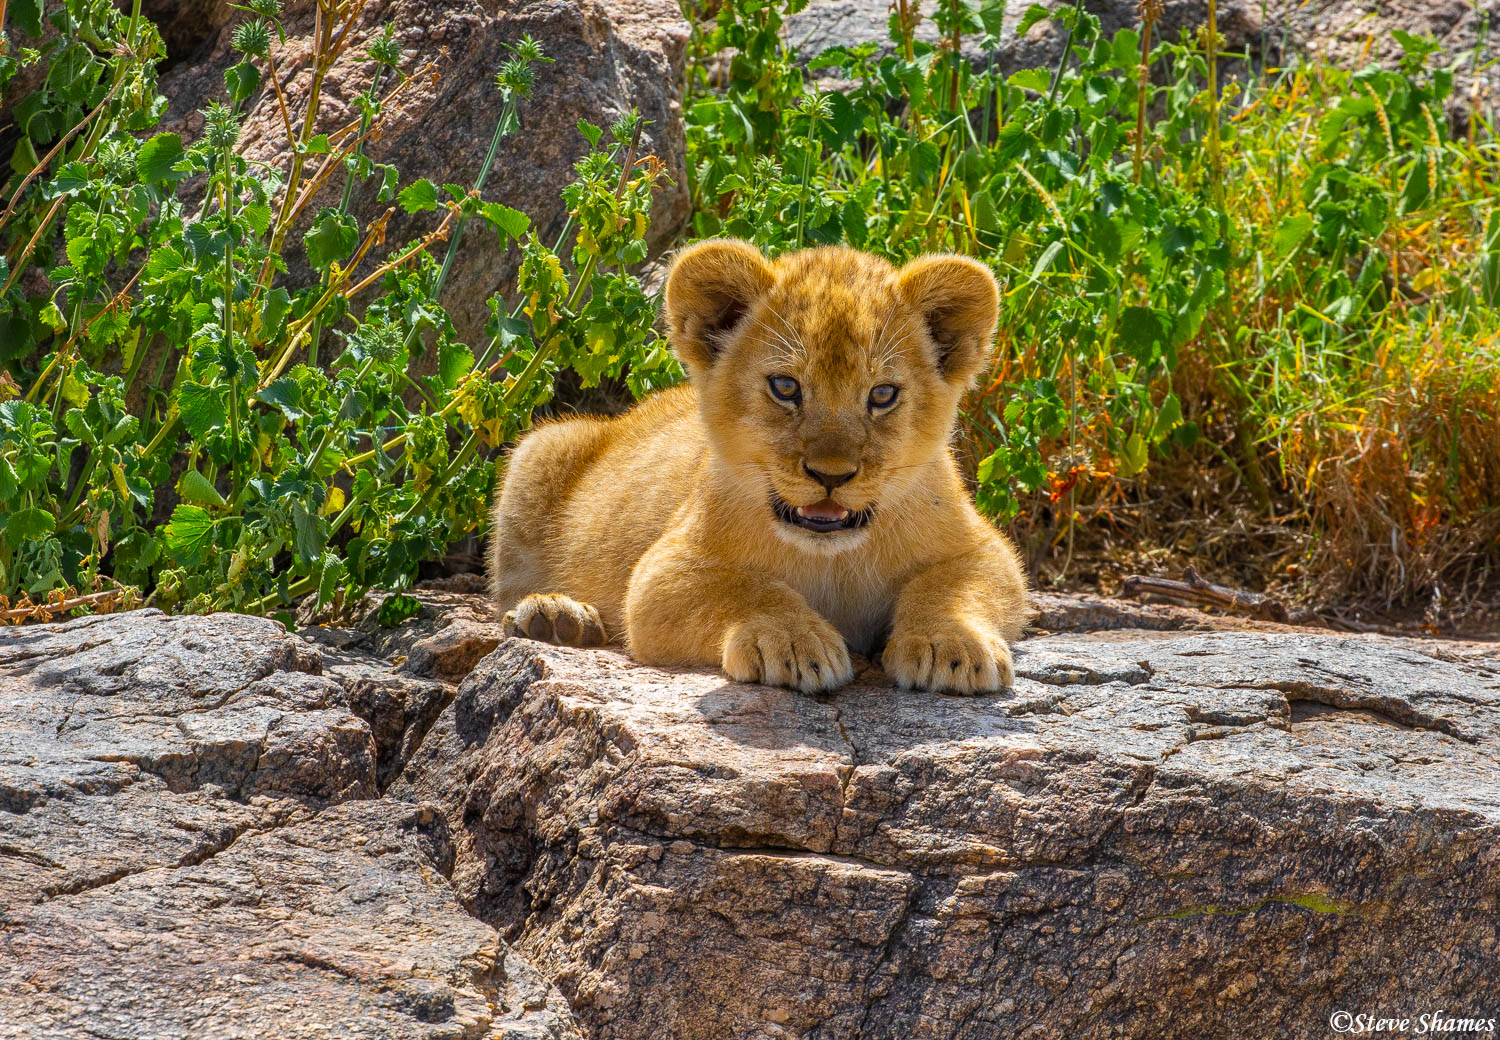 Cute little baby lion cub, resting on a rock.